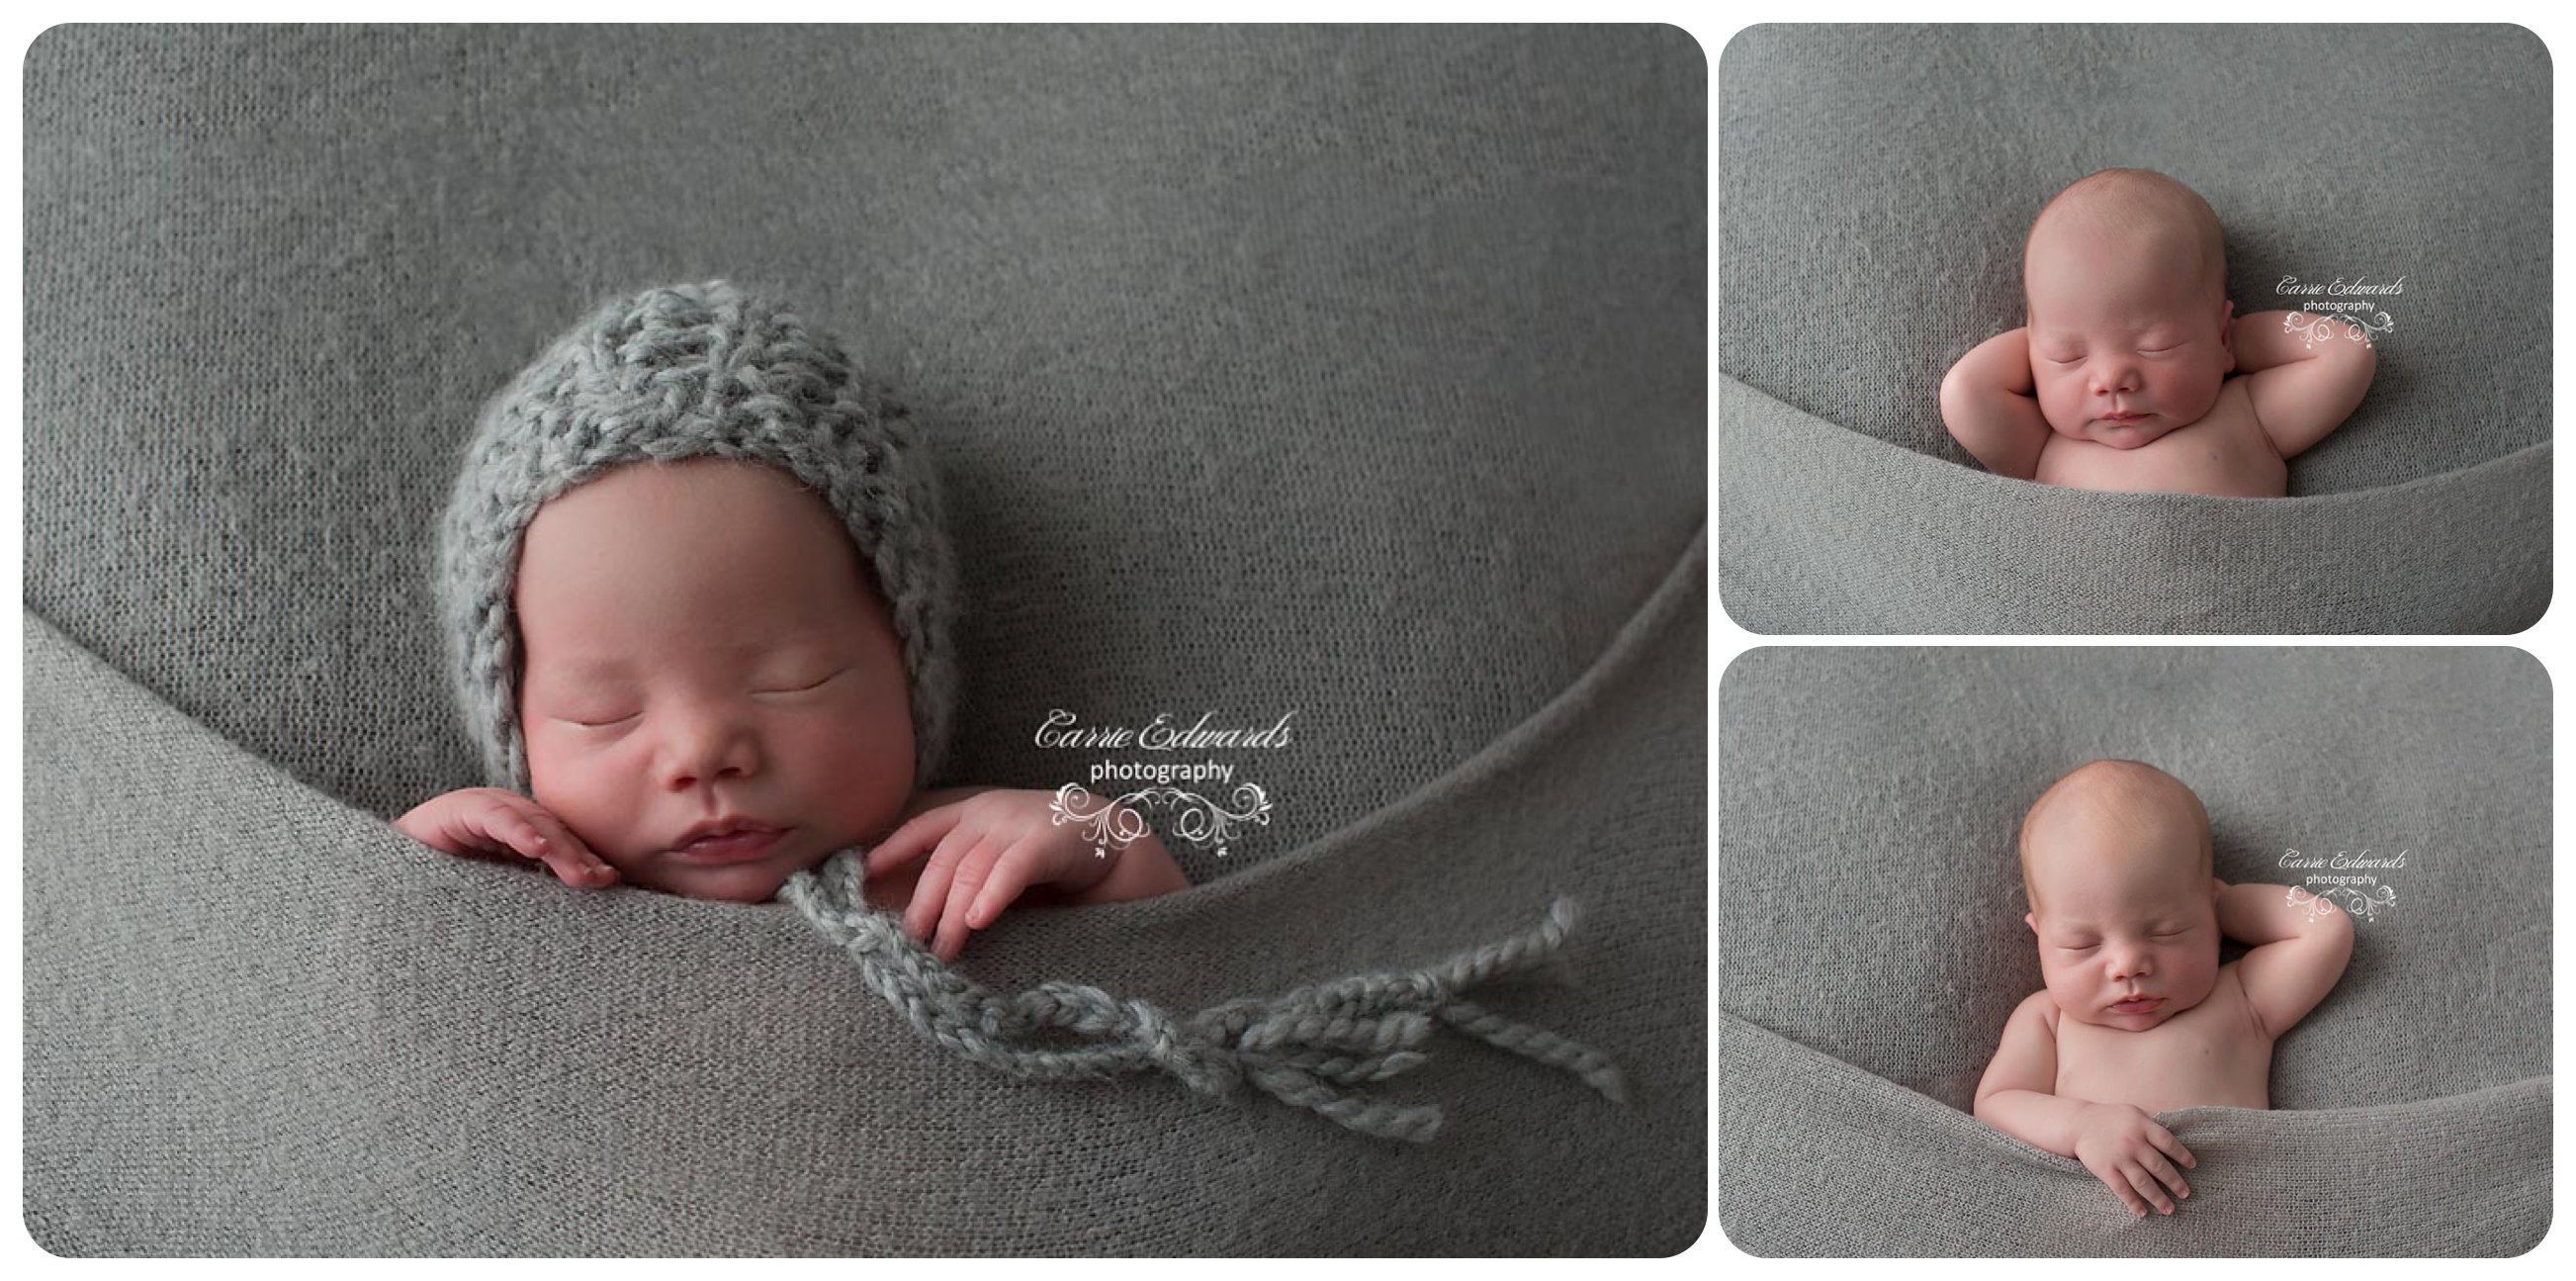 Baby Boy, Newborn Baby Boy, Grey hat, Sleeping Baby, Sleeping baby boy